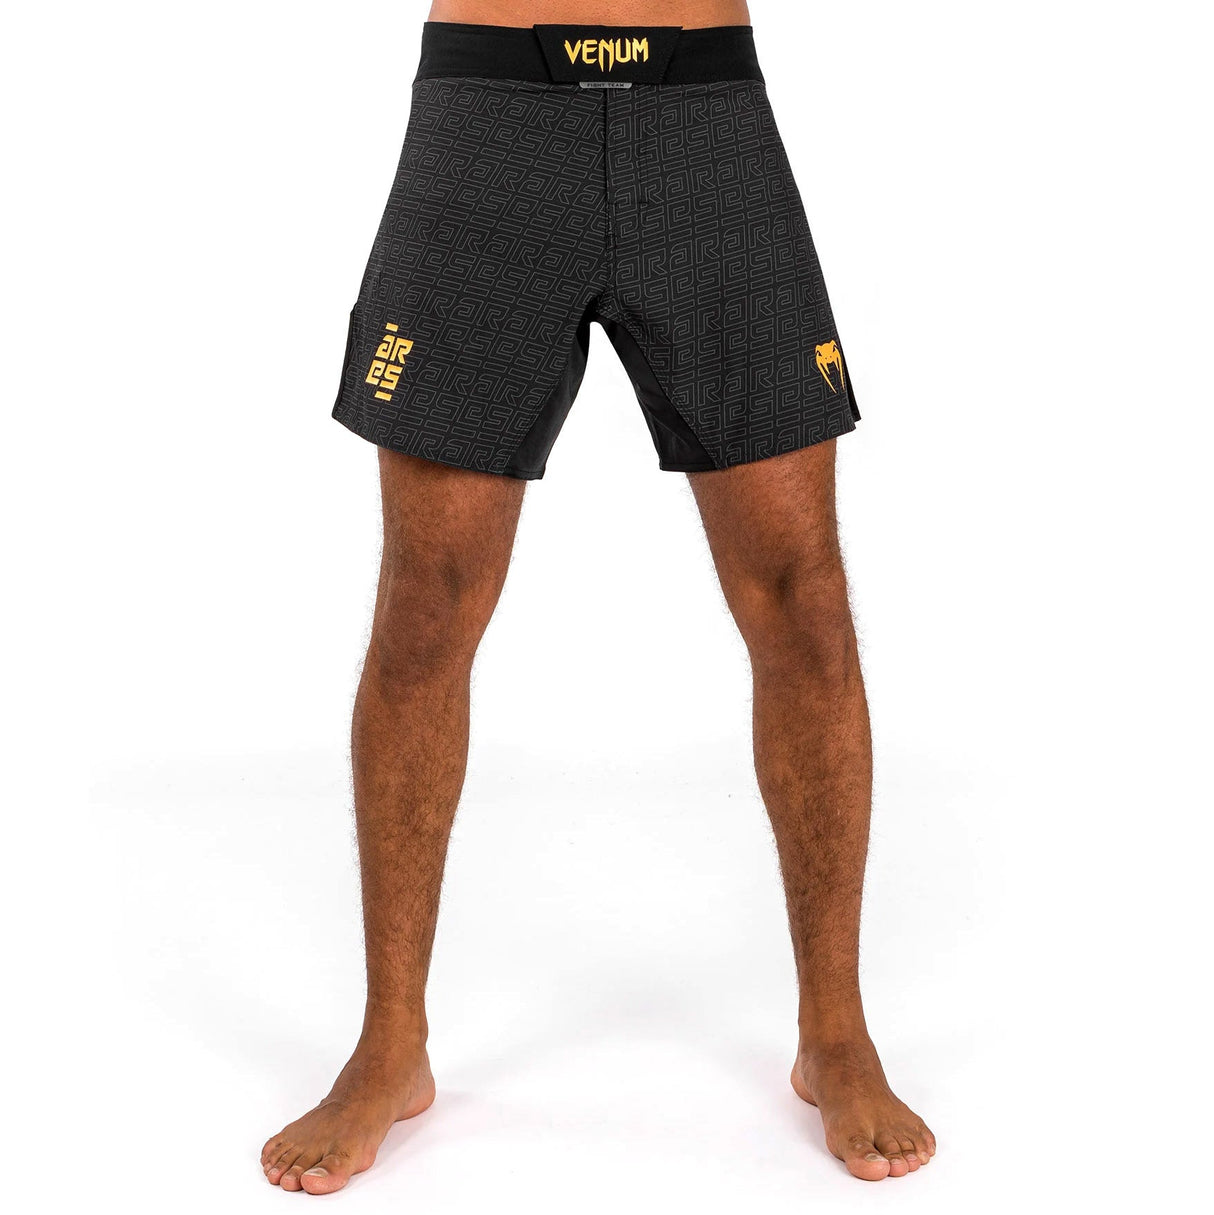 Venum x Ares 2.0 MMA Shorts - black/gold